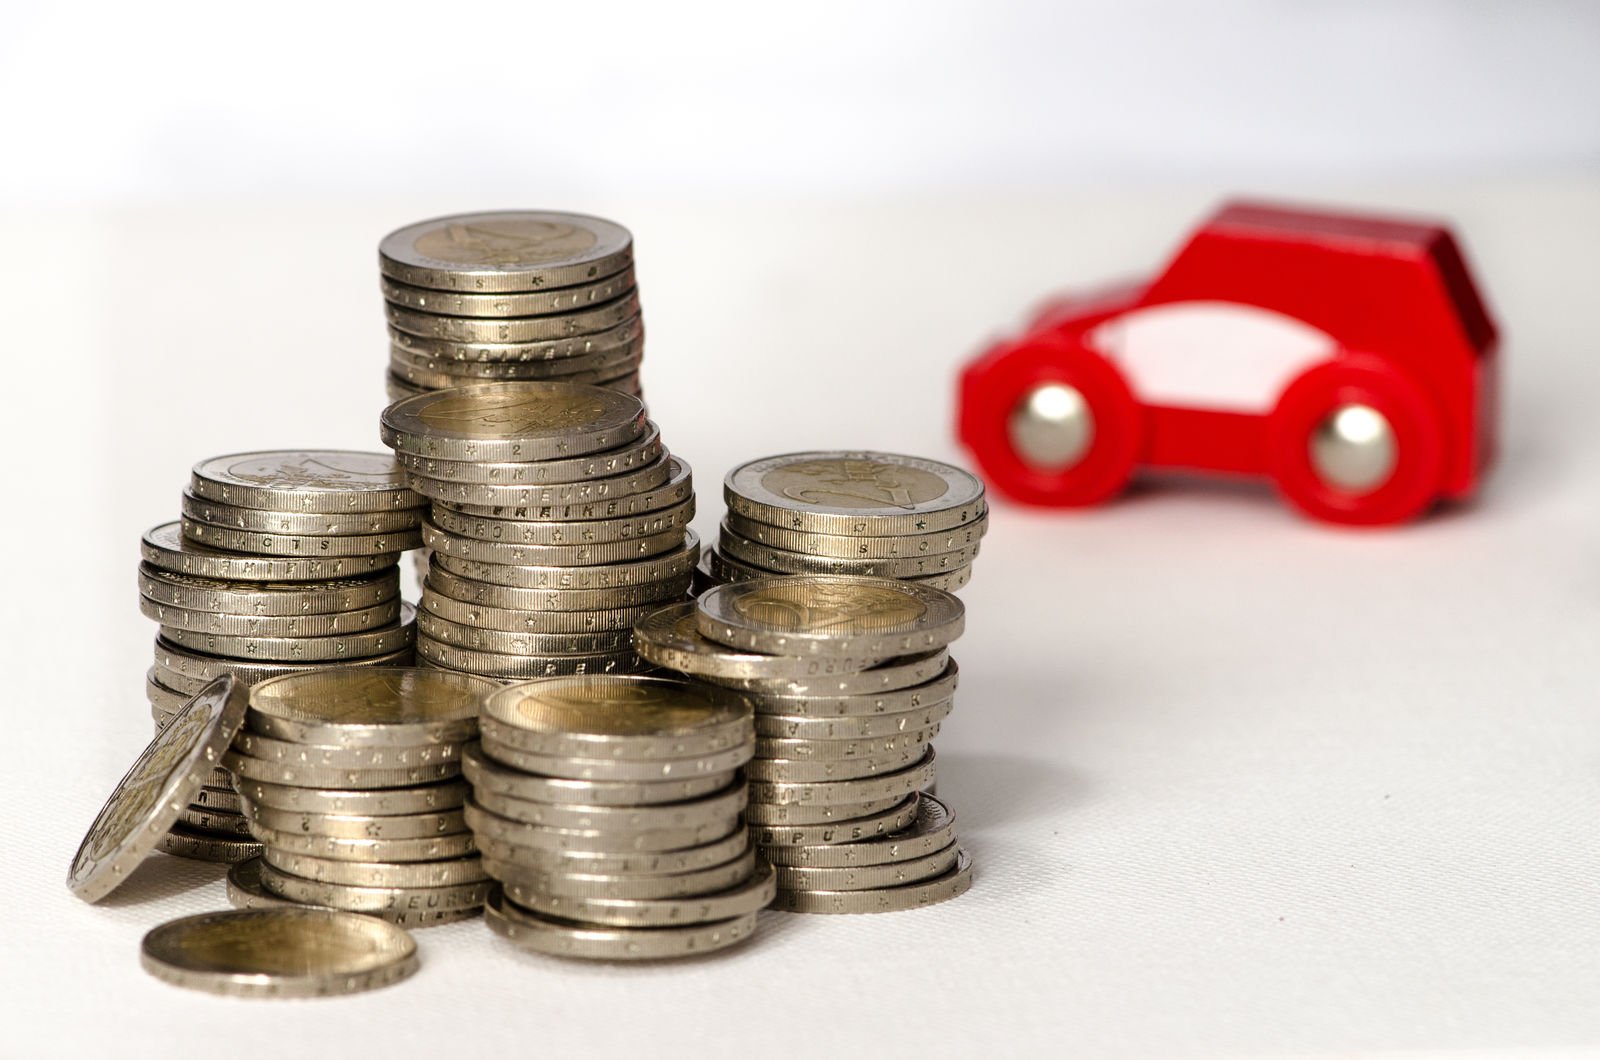 How do insurance companies determine car value?